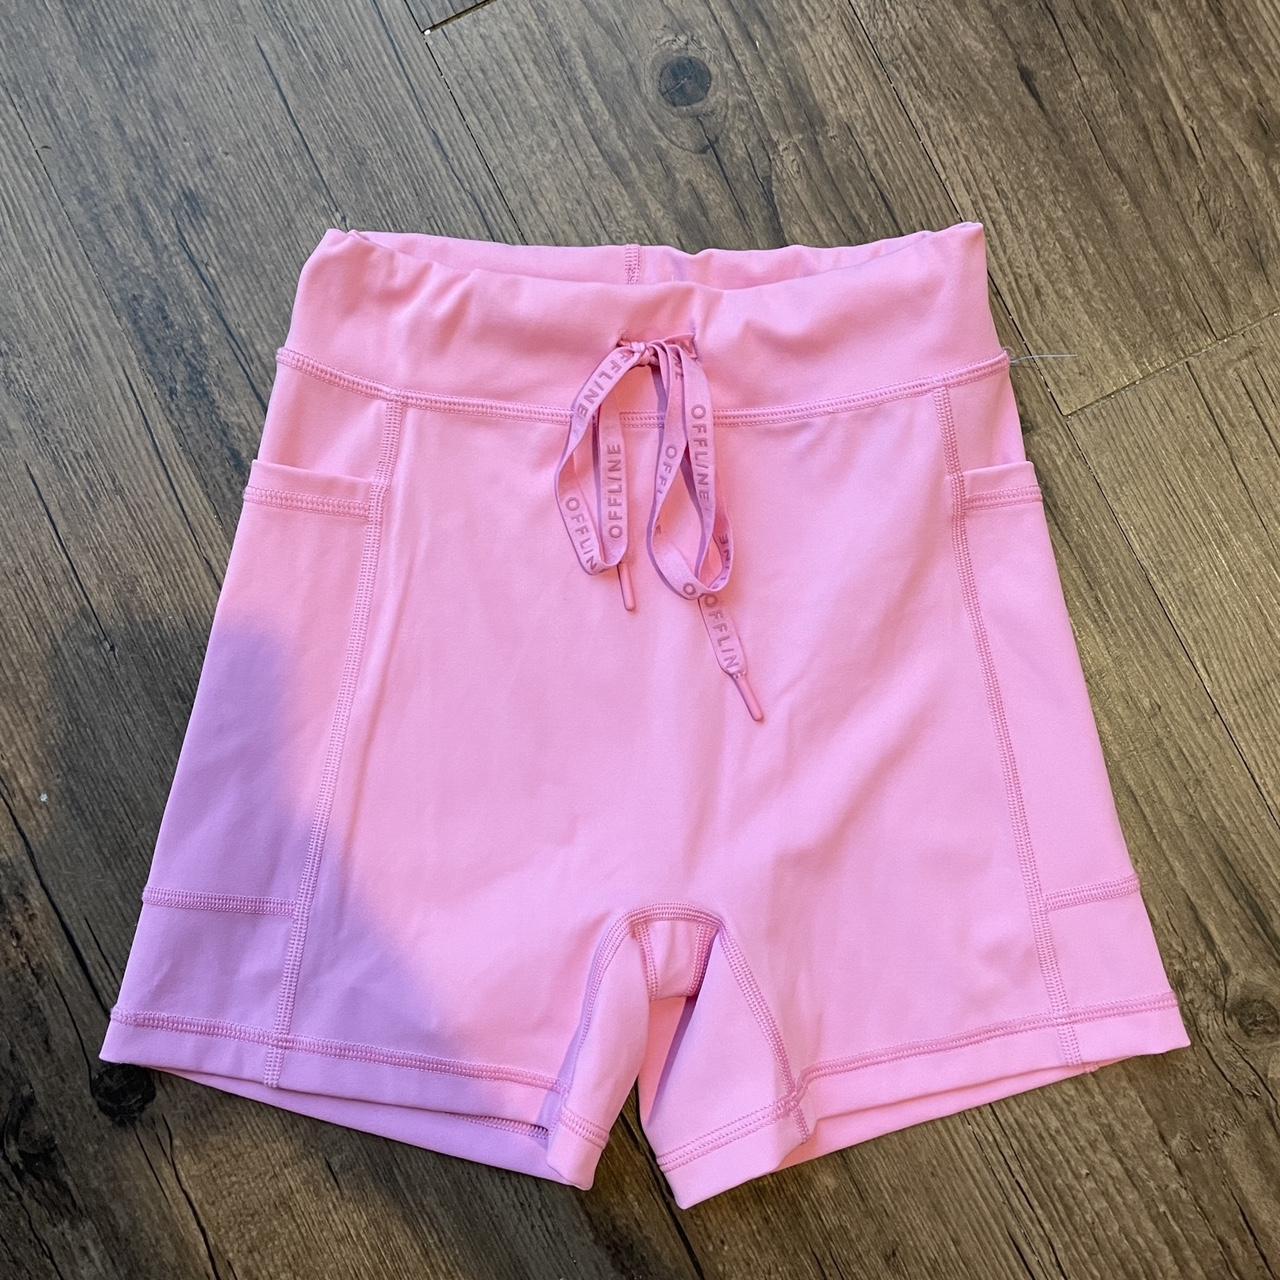 Aerie Women's Pink Shorts | Depop